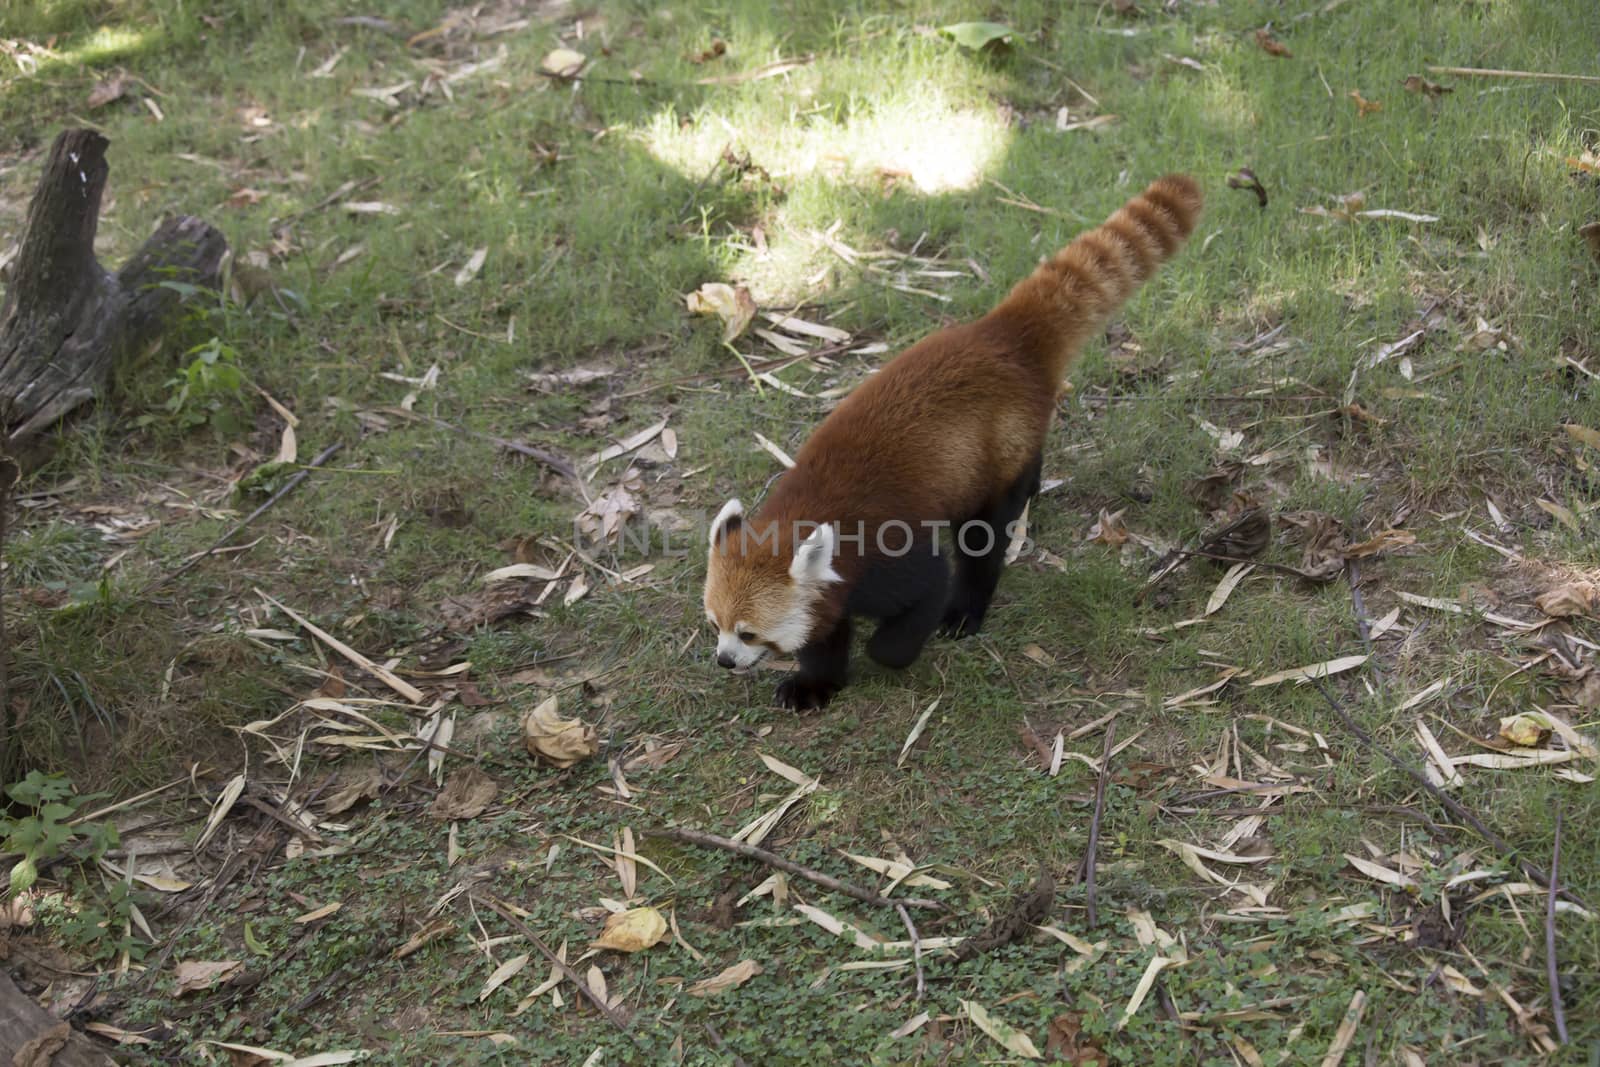 Red panda (Ailurus fulgens), or red bear-cat, walking in a grassy pasture